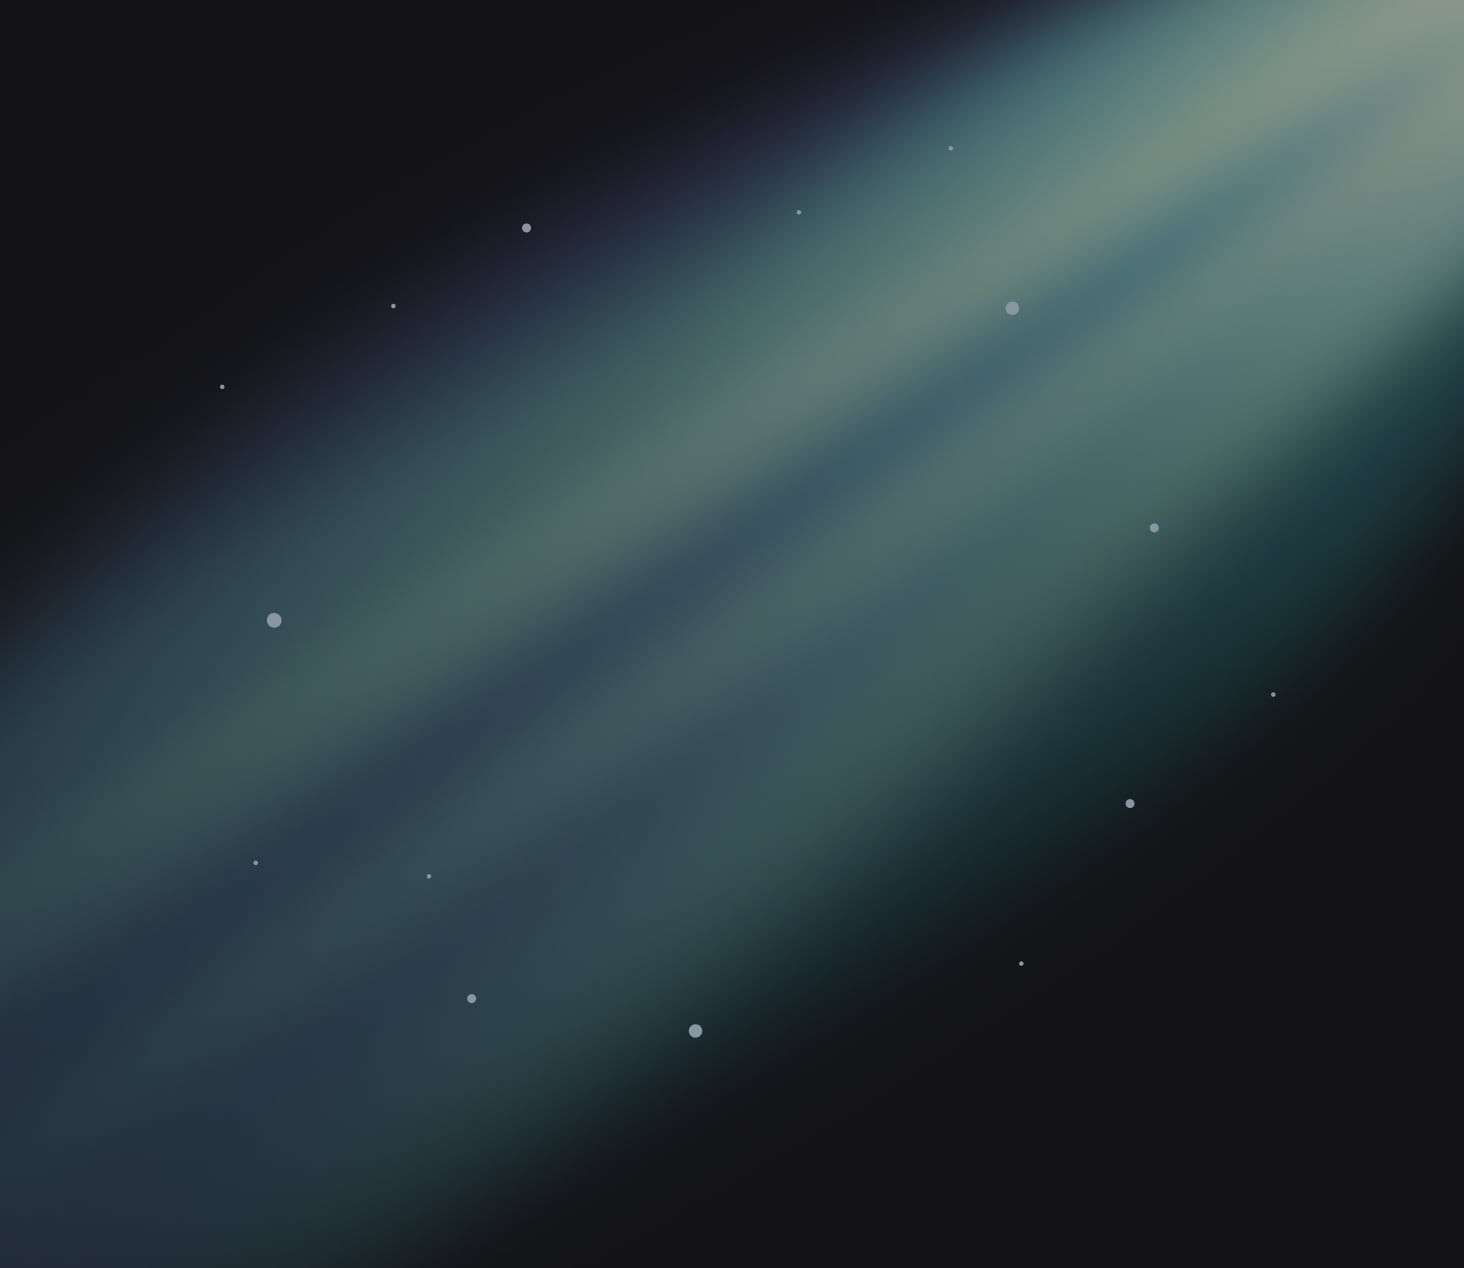 Blue spotlight image background